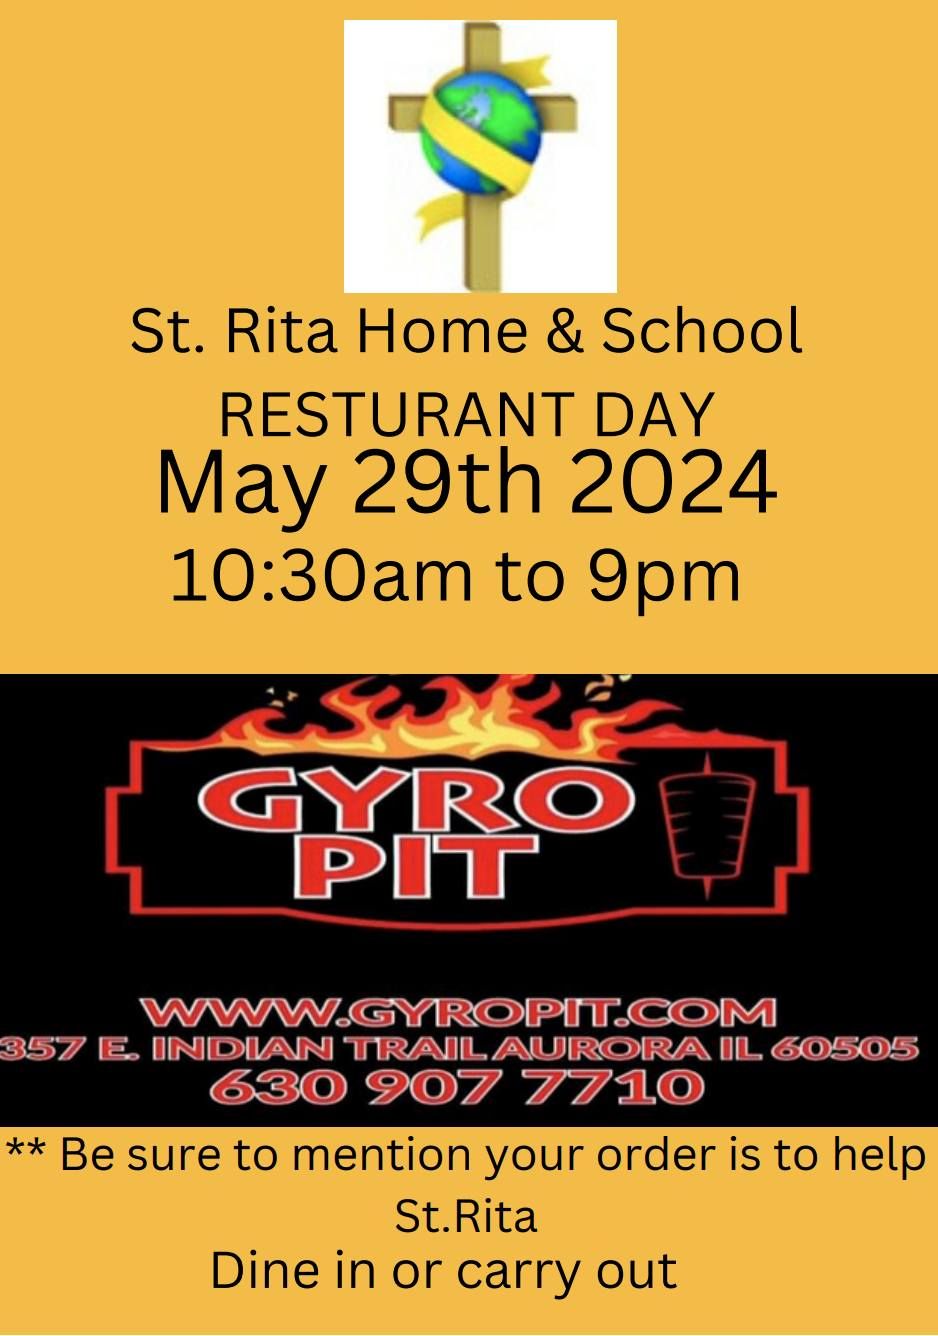 St. Rita Restaurant Night at Gyro Pit!